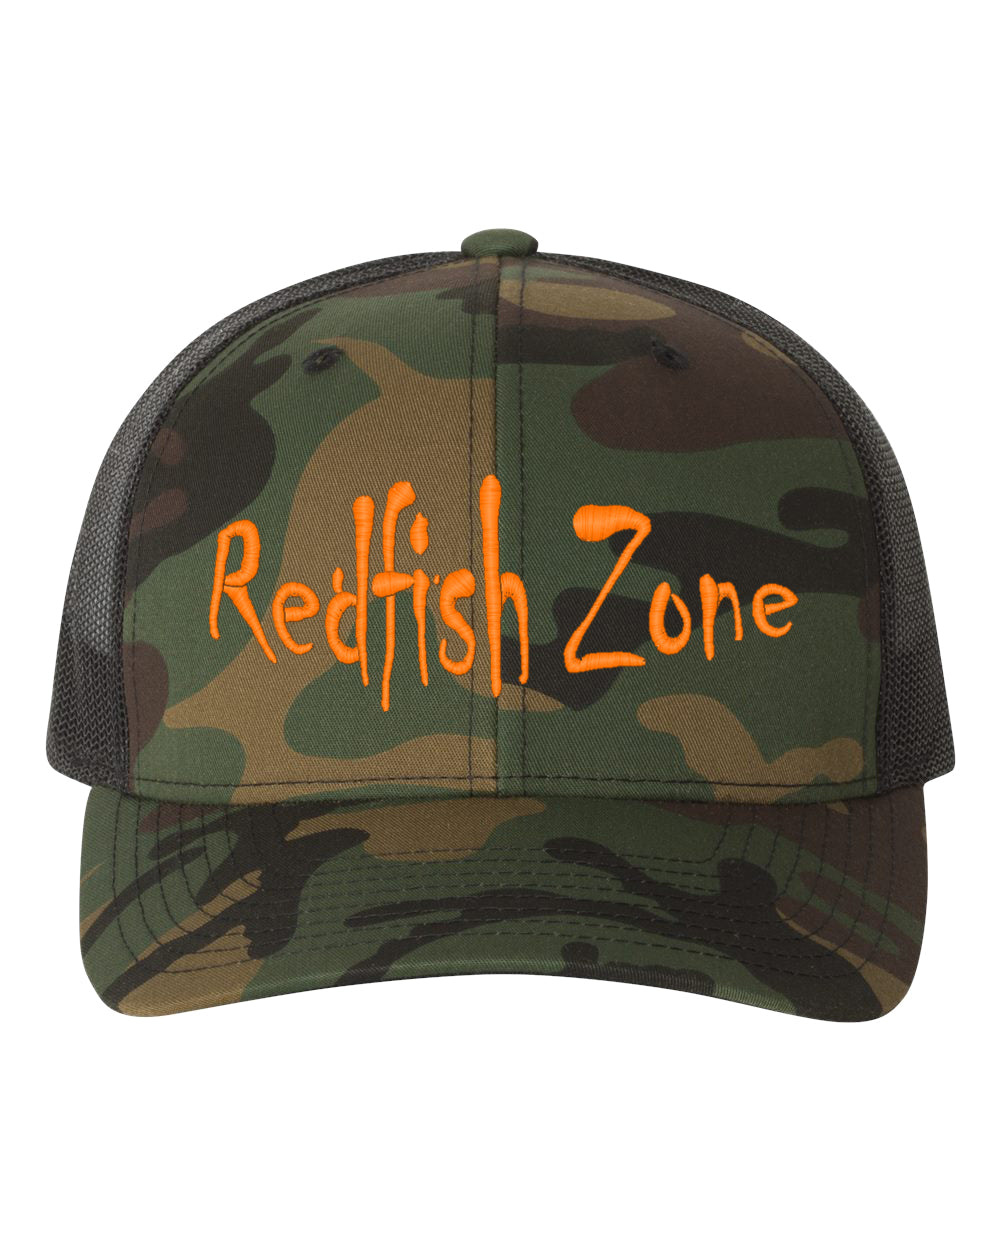 Redfish Zone, Camo/Black Trucker Mesh Snapback With Hunter Orange Raised Lettering